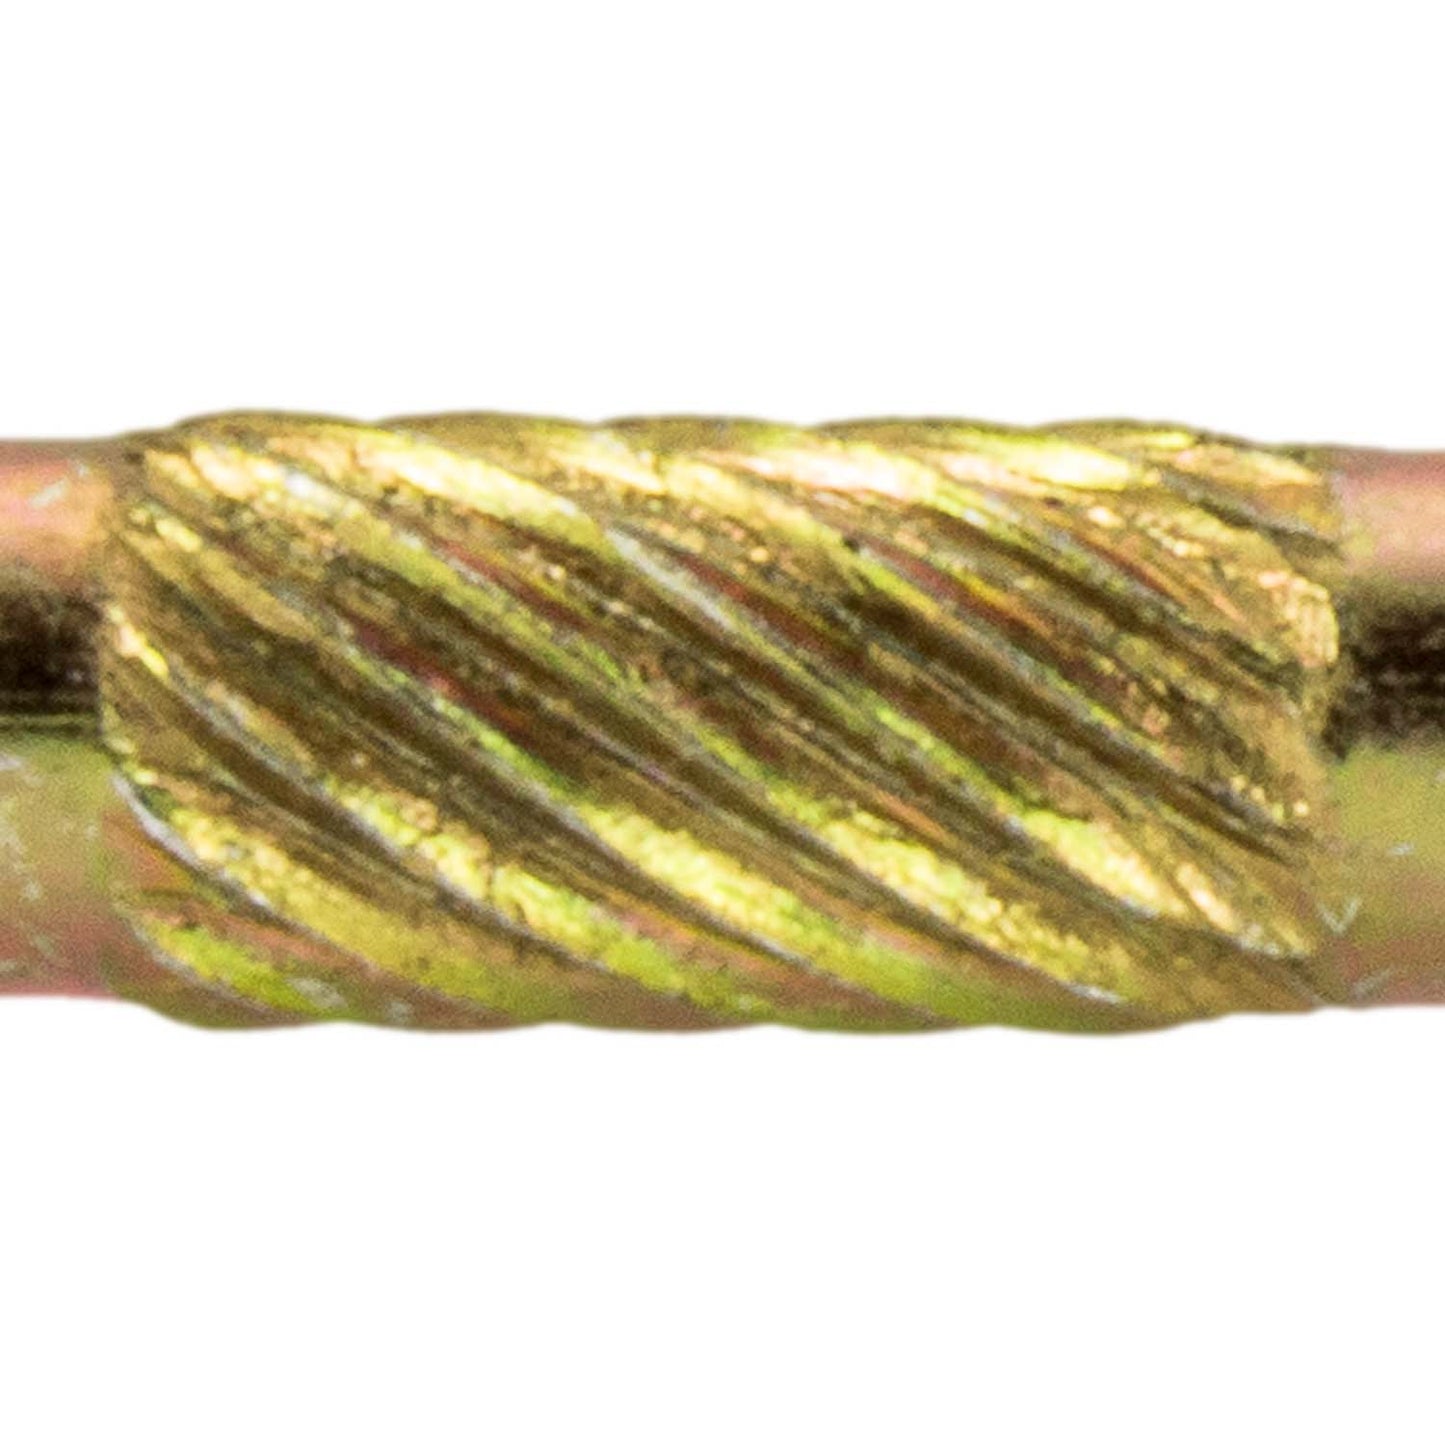 #10 Yellow Zinc Coated General Purpose Wood Screws. Torx/Star Drive Head - Multipurpose Torx/Star Drive Wood Screws